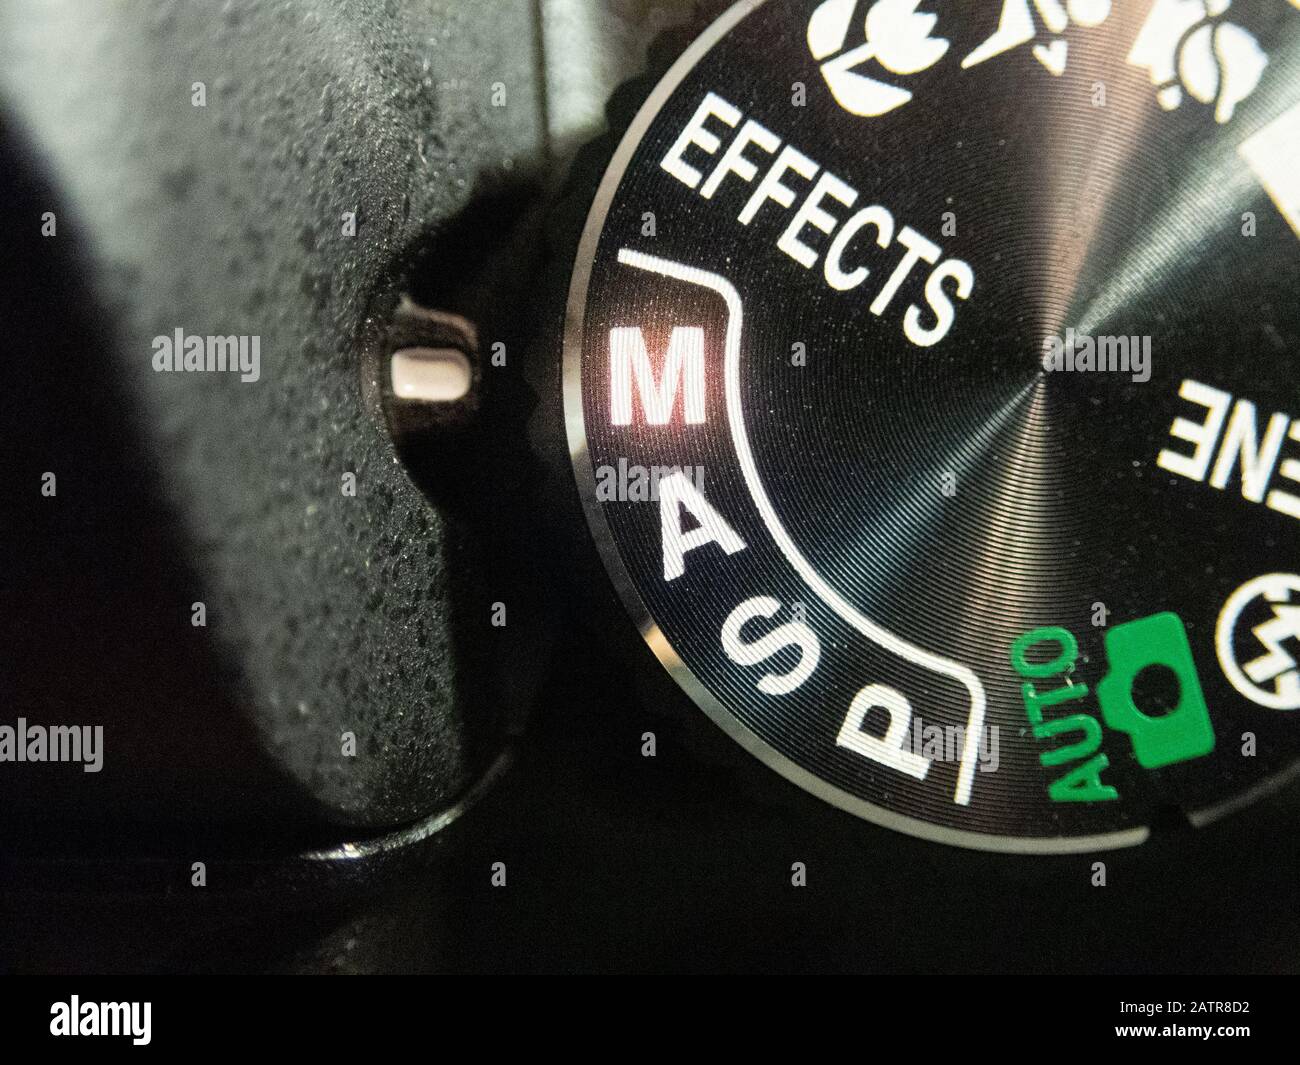 Bukarest/Rumänien - 24. Juli 2019: Makro eines Nikon DSLR-Kamera-Moduswählers im manuellen Modus aktiviert. Stockfoto